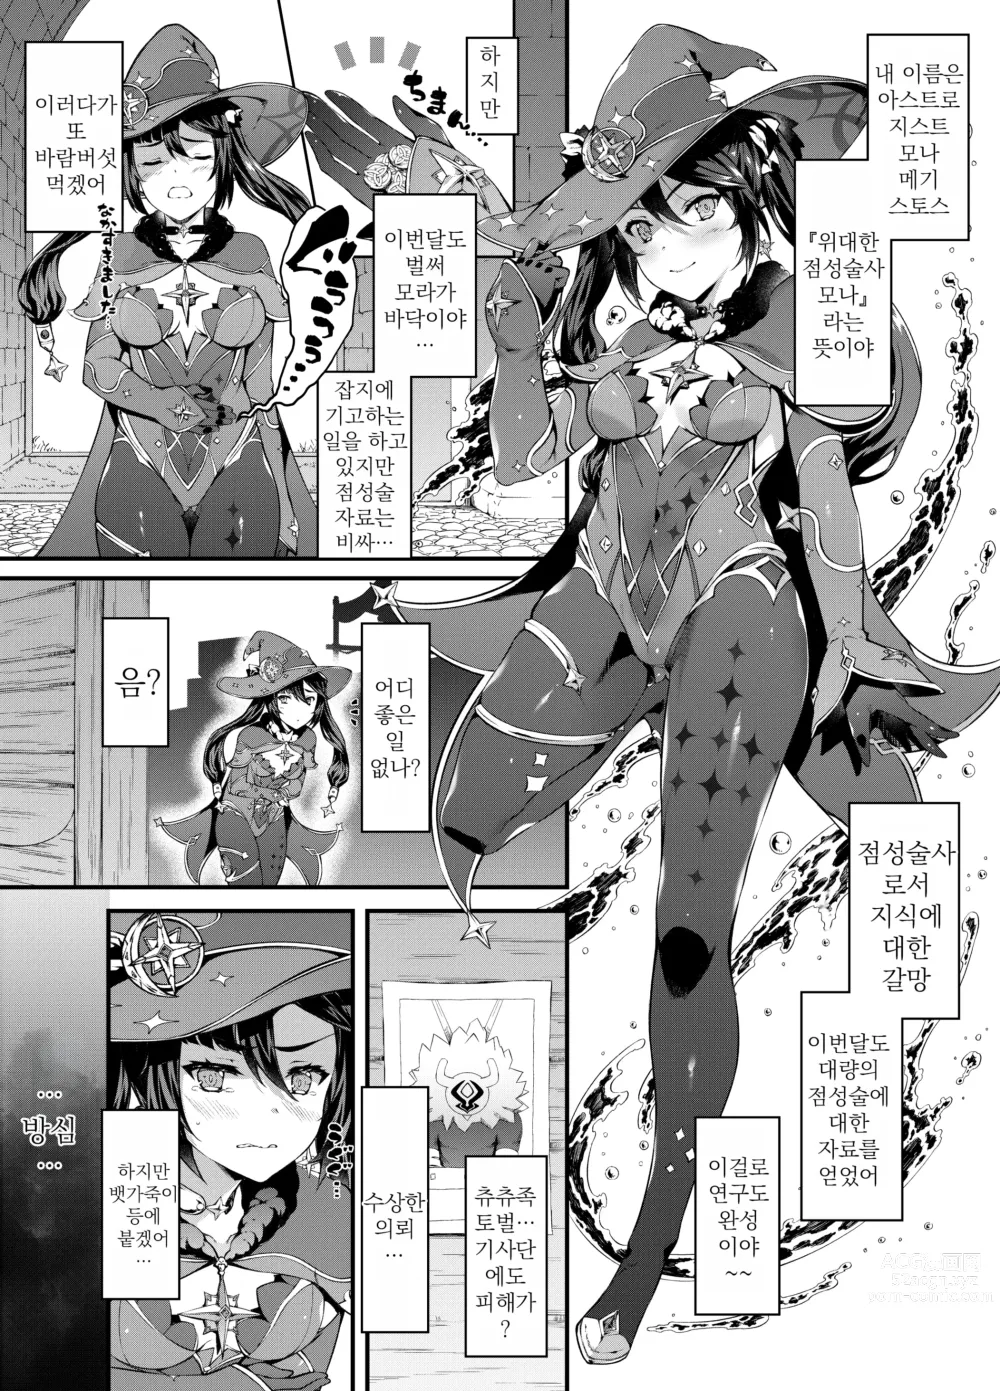 Page 3 of doujinshi 별이 떨어진 날